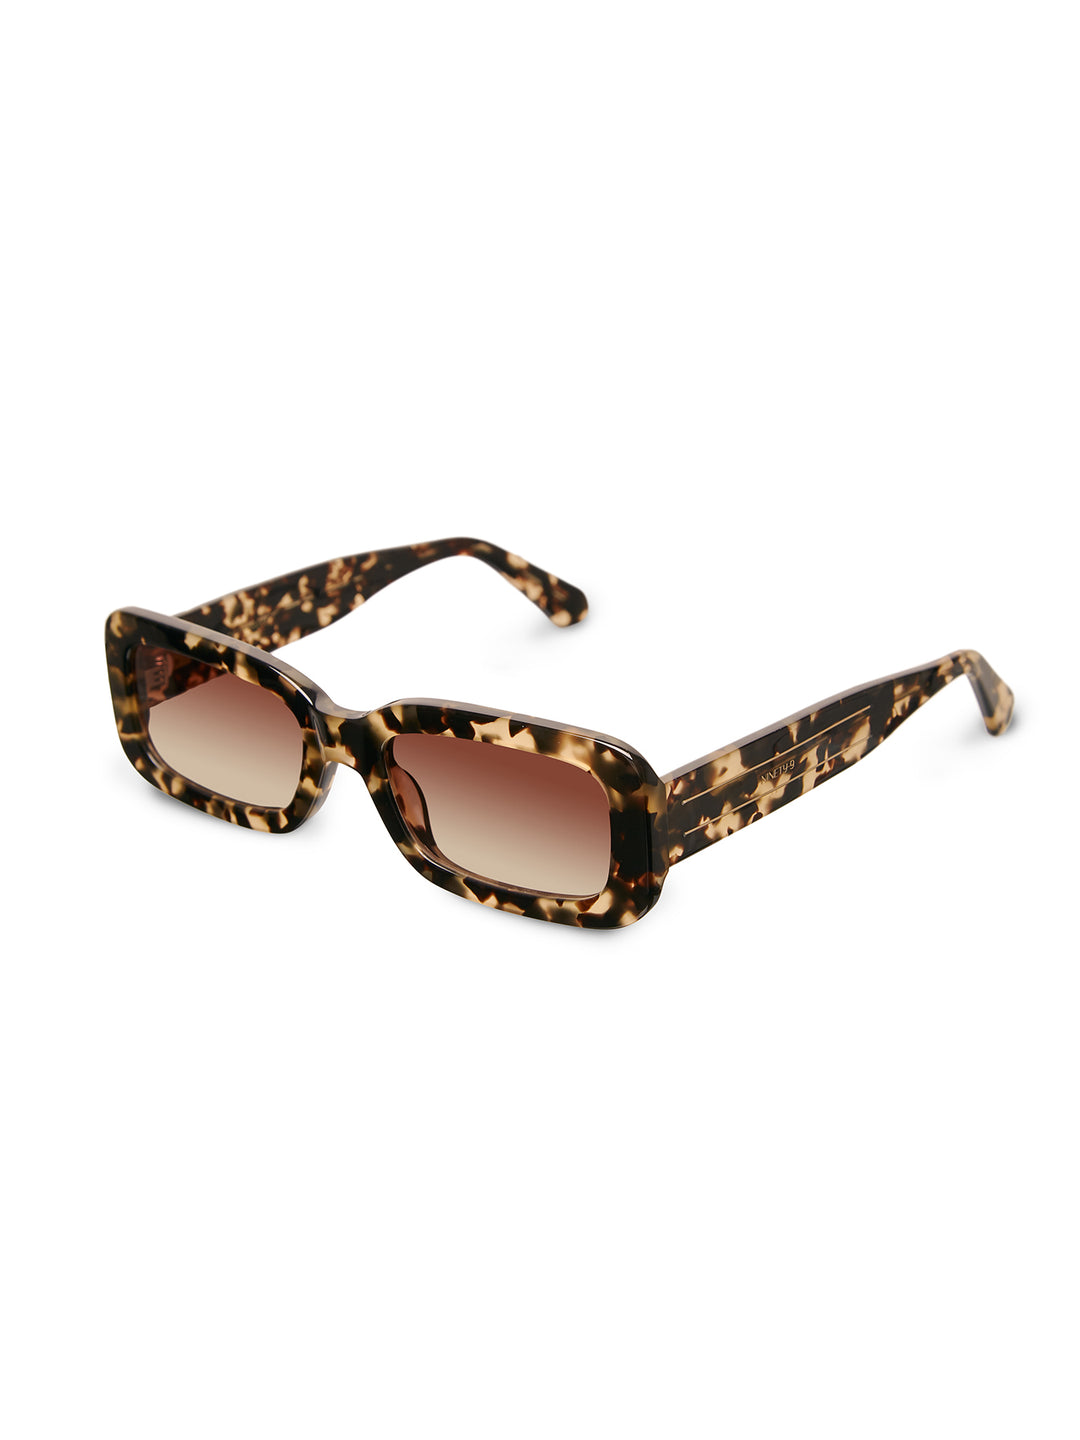 RETRO - Sunglasses • Gold Brown Tortoise